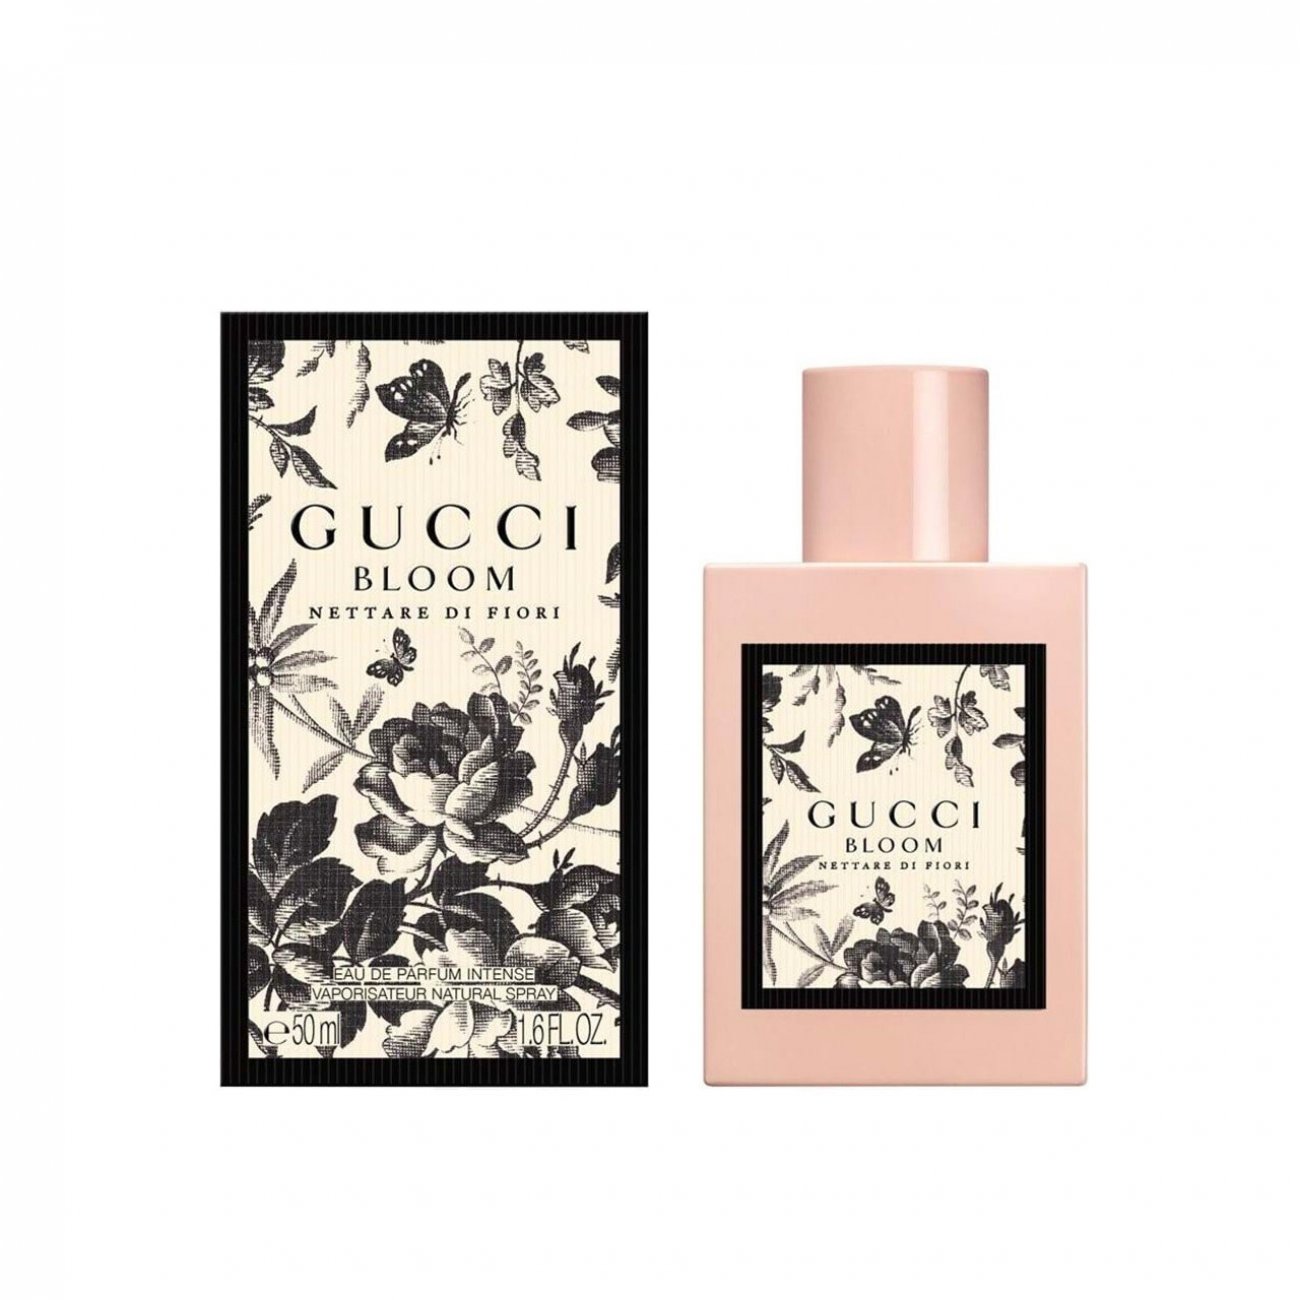 Forfølge Ocean cafeteria Buy Gucci Bloom Nettare Di Fiori Eau de Parfum Intense · USA